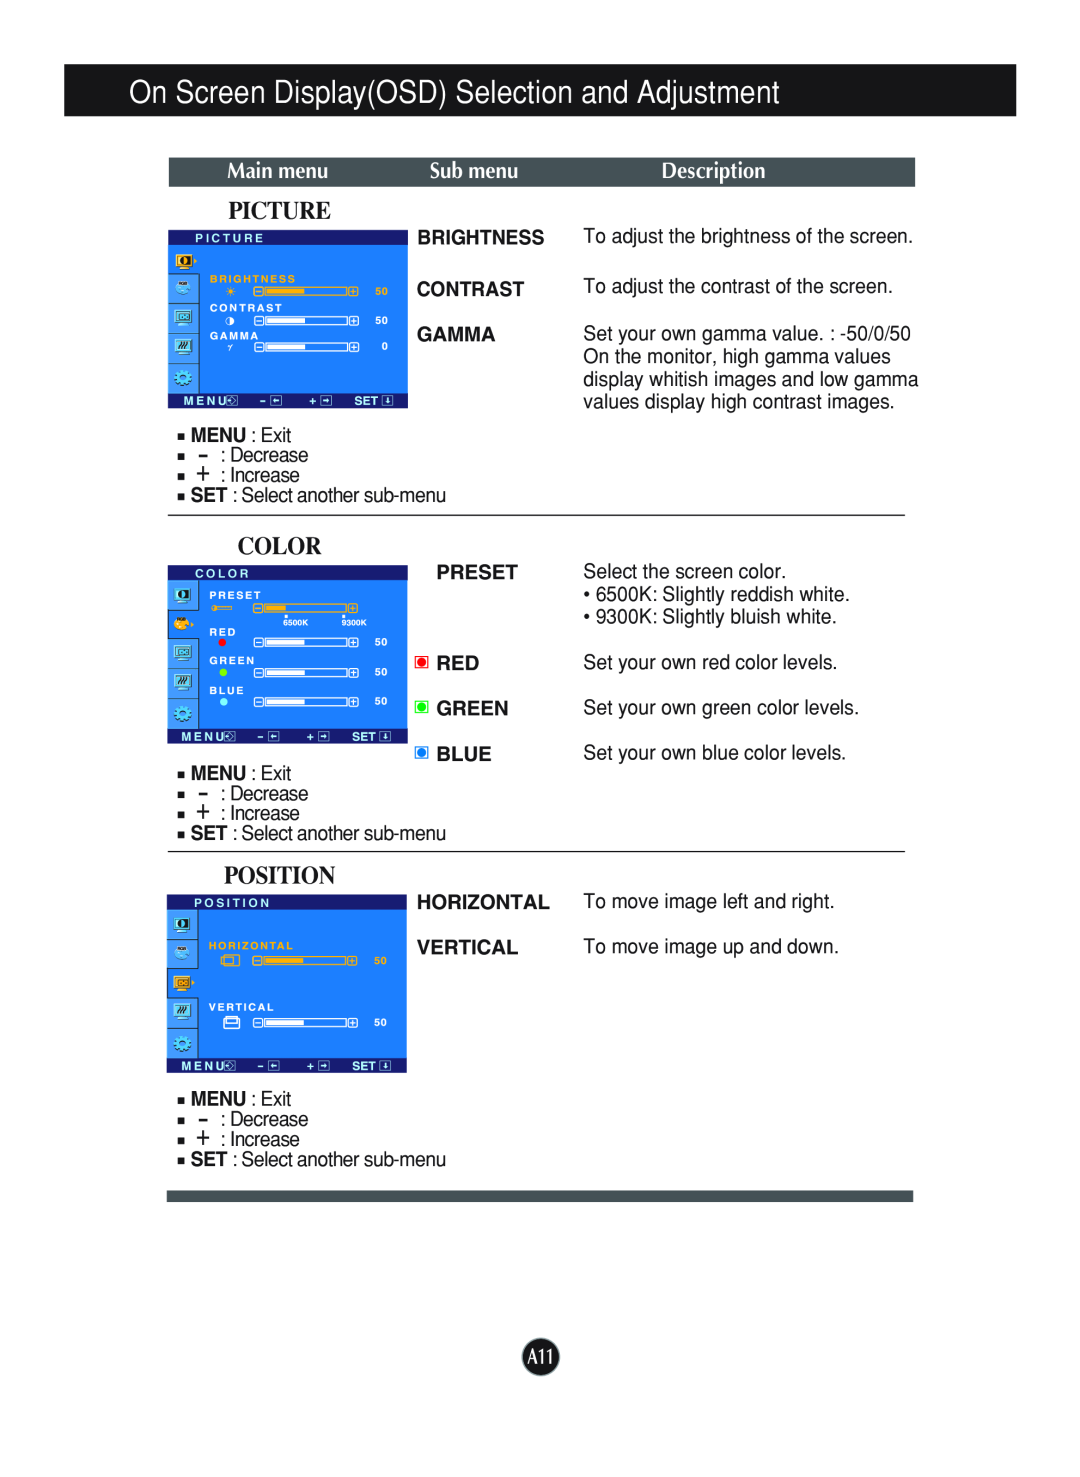 LG Electronics L1940B Picture, Color, Position, Main menu, Description, On Screen DisplayOSD Selection and Adjustment 